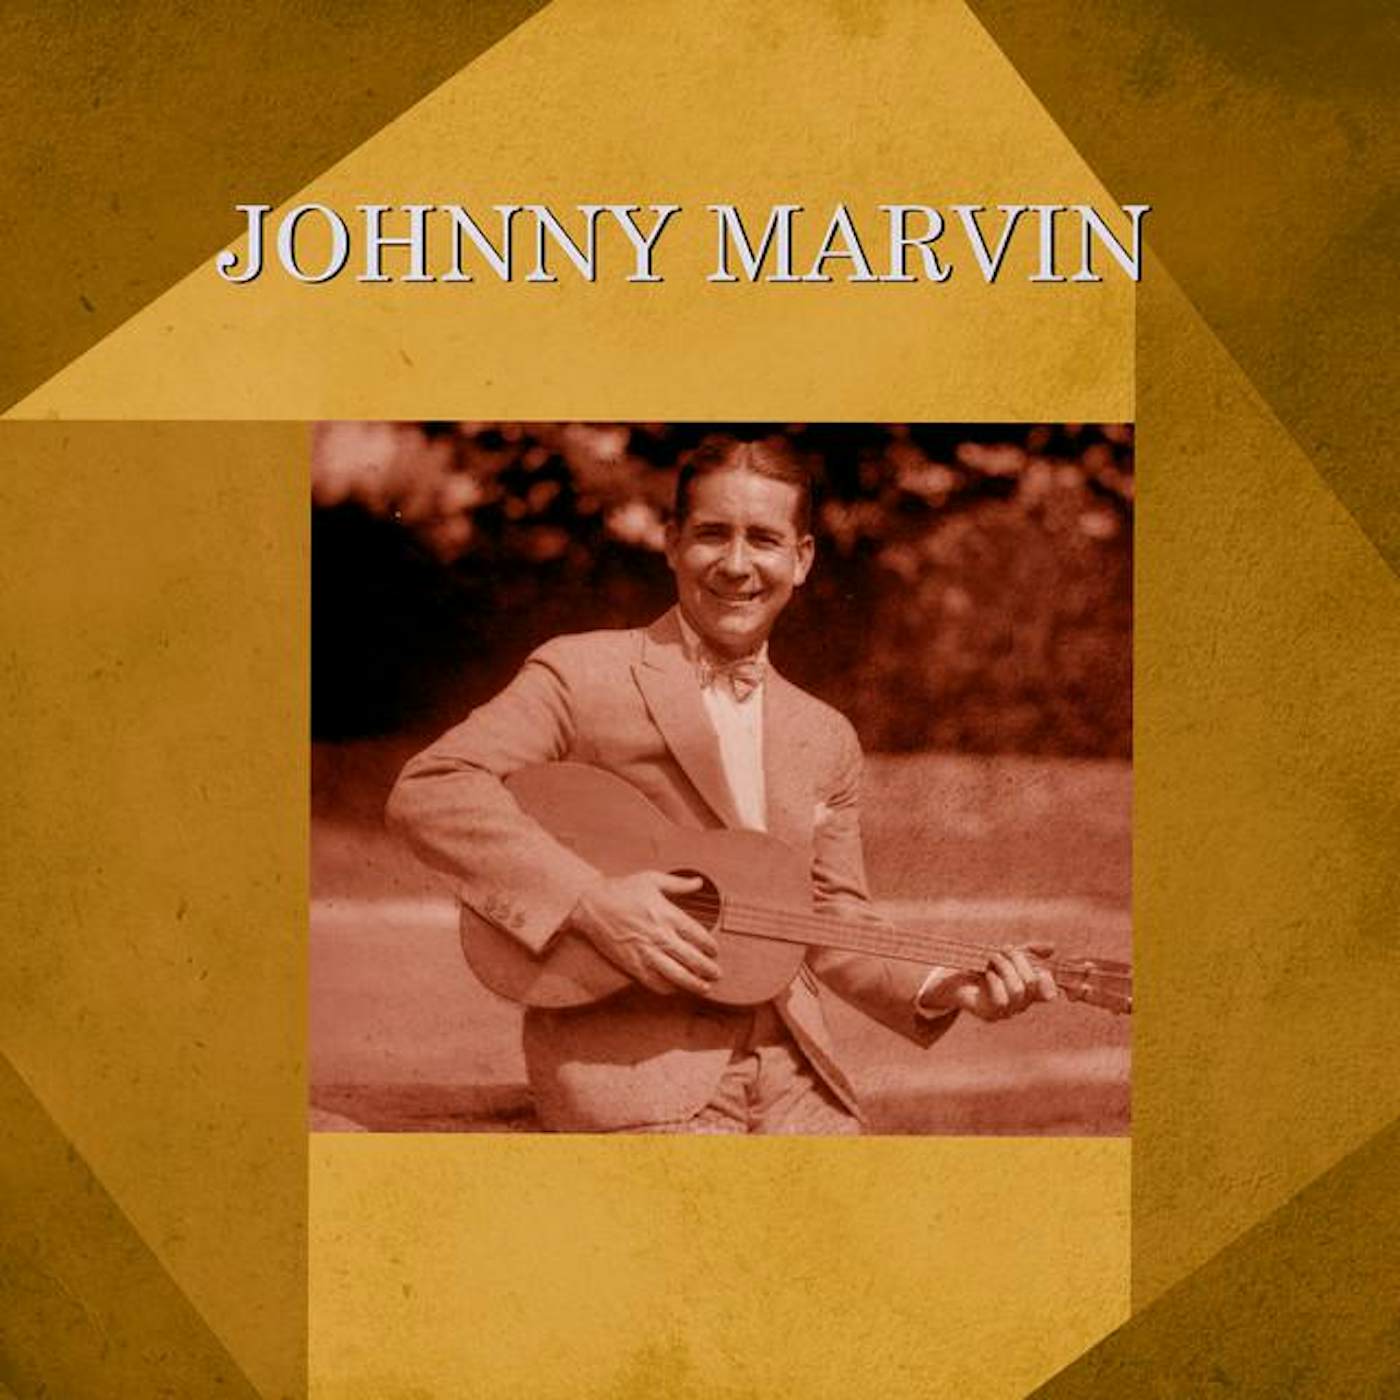 Johnny Marvin